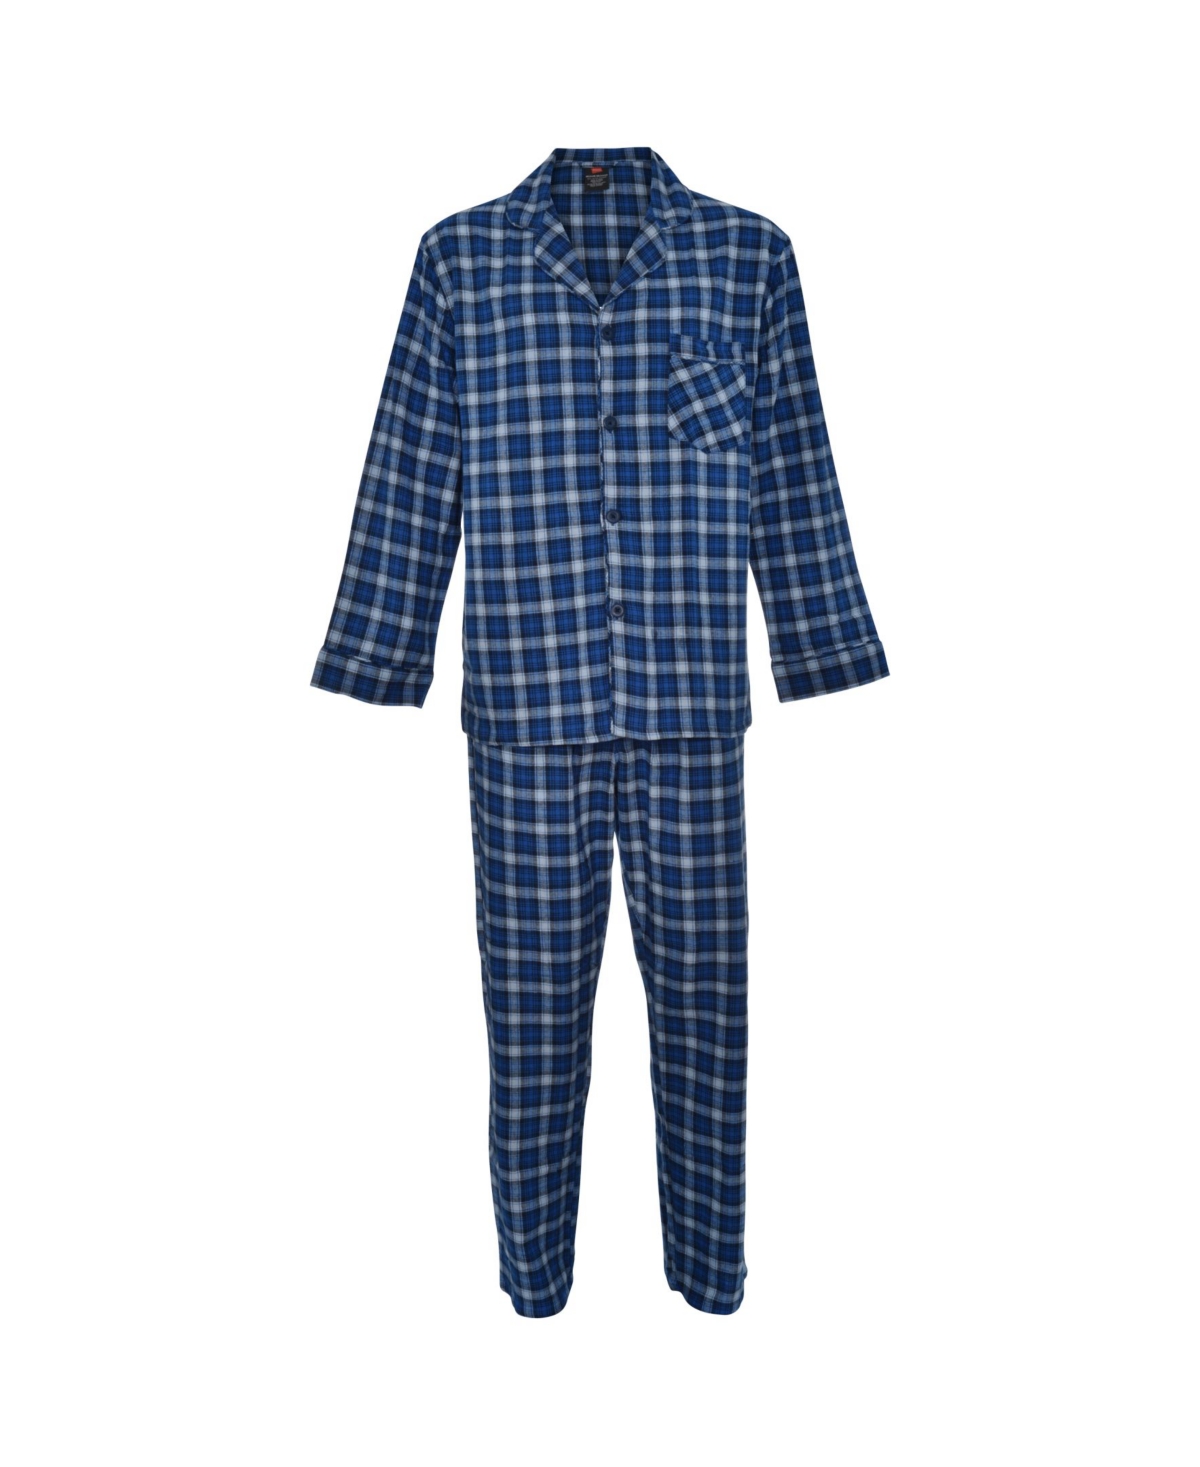 Hanes Men's Flannel Plaid Pajama Set In Blue Plaid